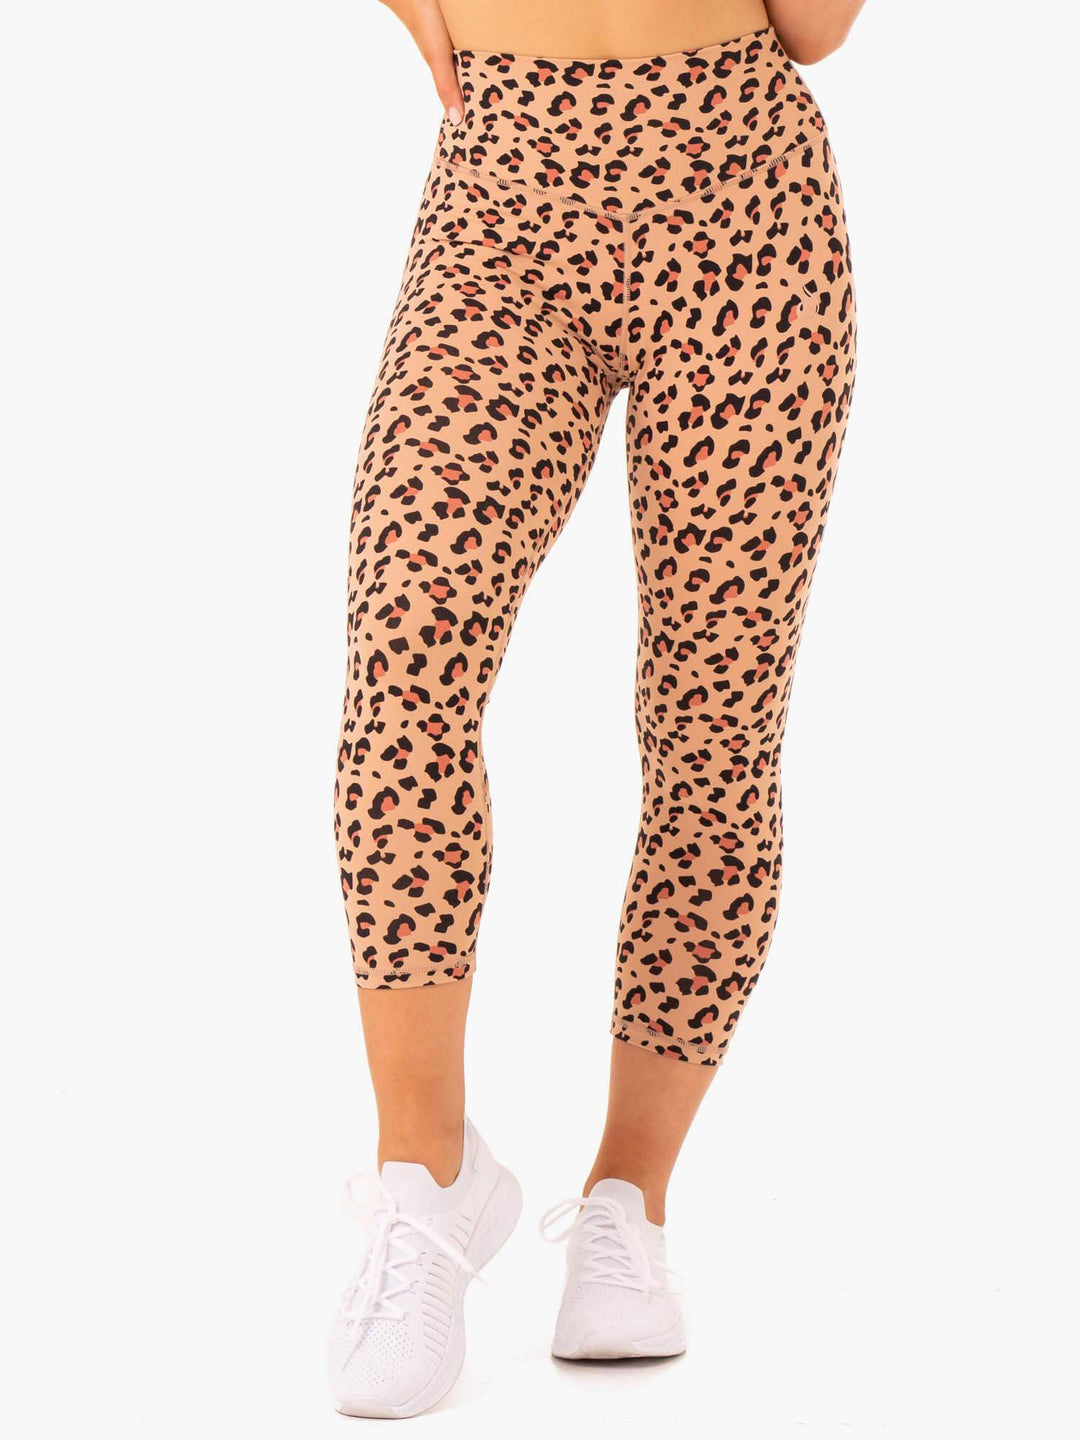 Hybrid 7/8 Leggings - Tan Leopard Clothing Ryderwear 